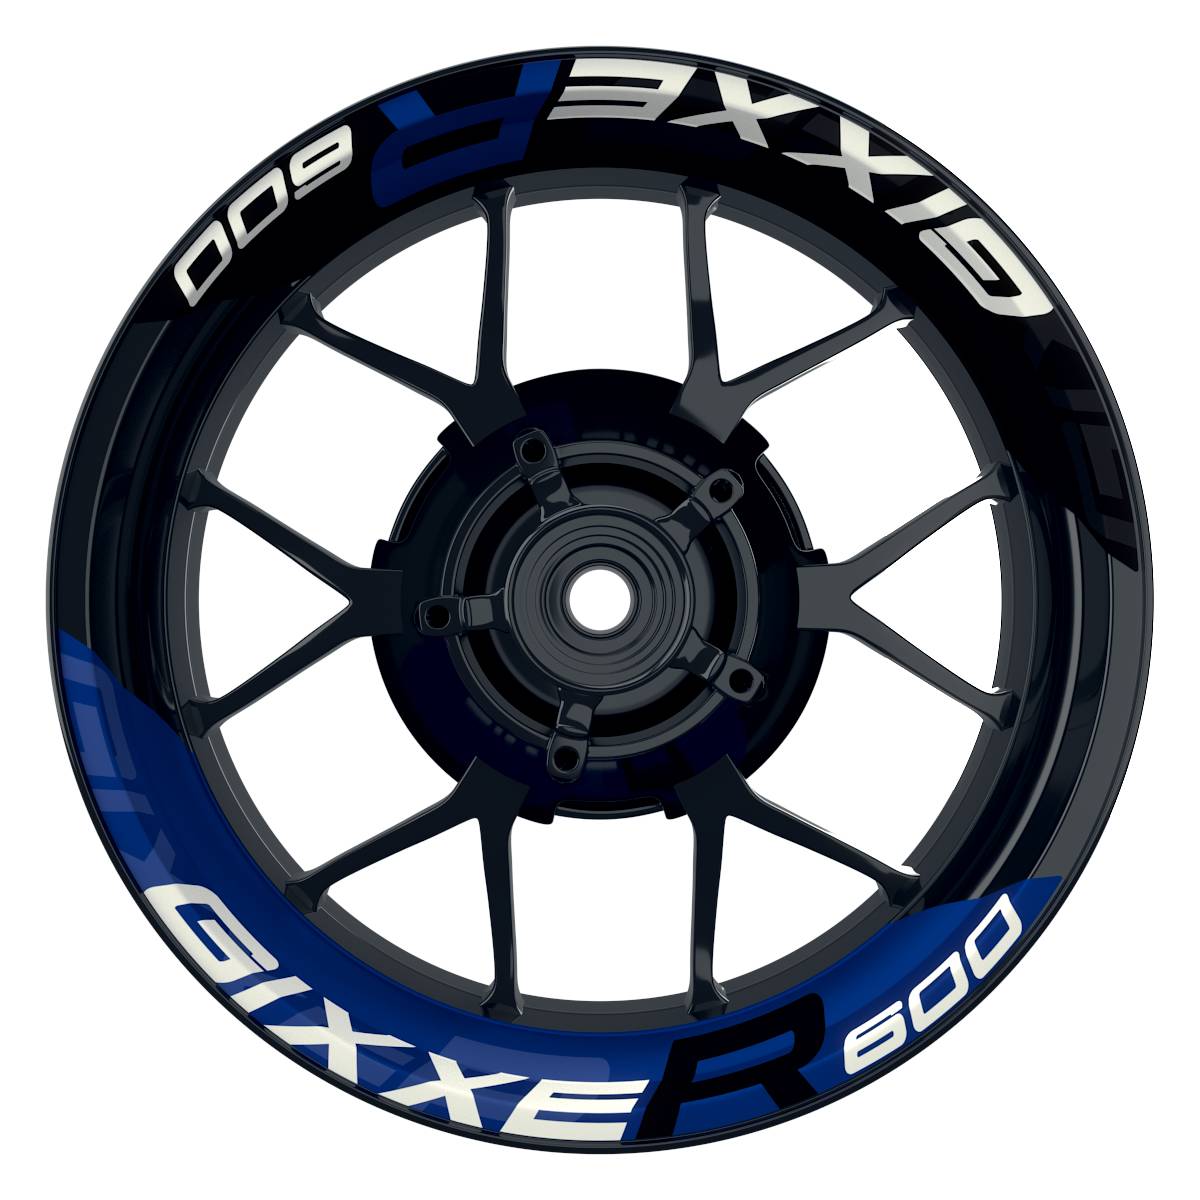 Wheelsticker Felgenaufkleber GIXXER600 halb halb V2 schwarz blau Frontansicht